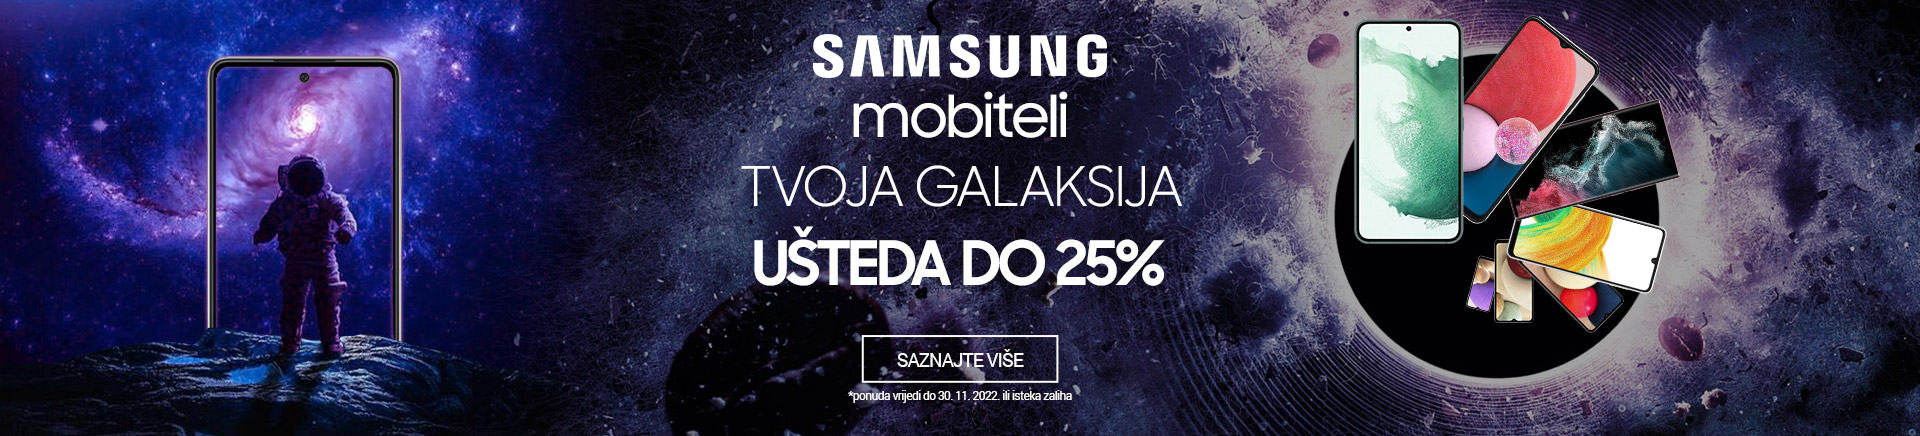 BA Samsung tvoja galaksija MOBILE 380 X 436.jpg